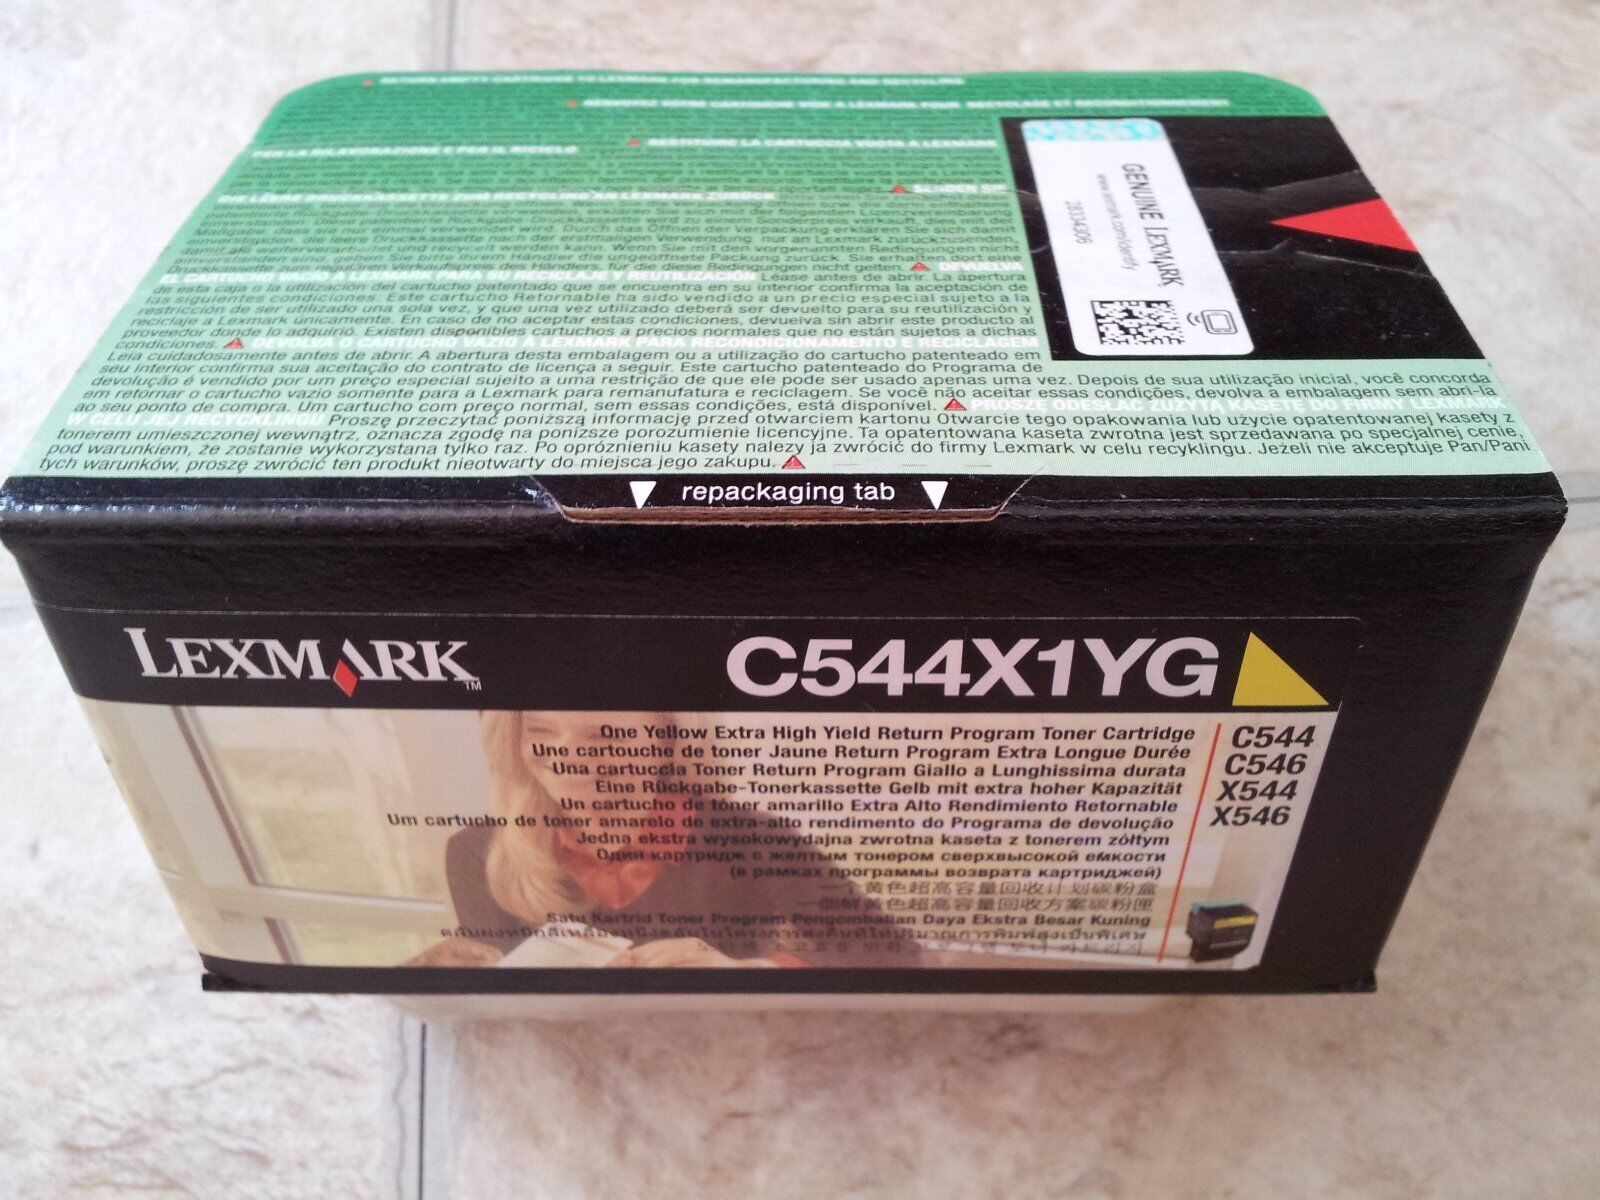 LEXMARK-C544X1YG ONE YELLOW EXTRA HIGH YIELD RETURN TONER CARTRIDGE (NEW IN BOX)